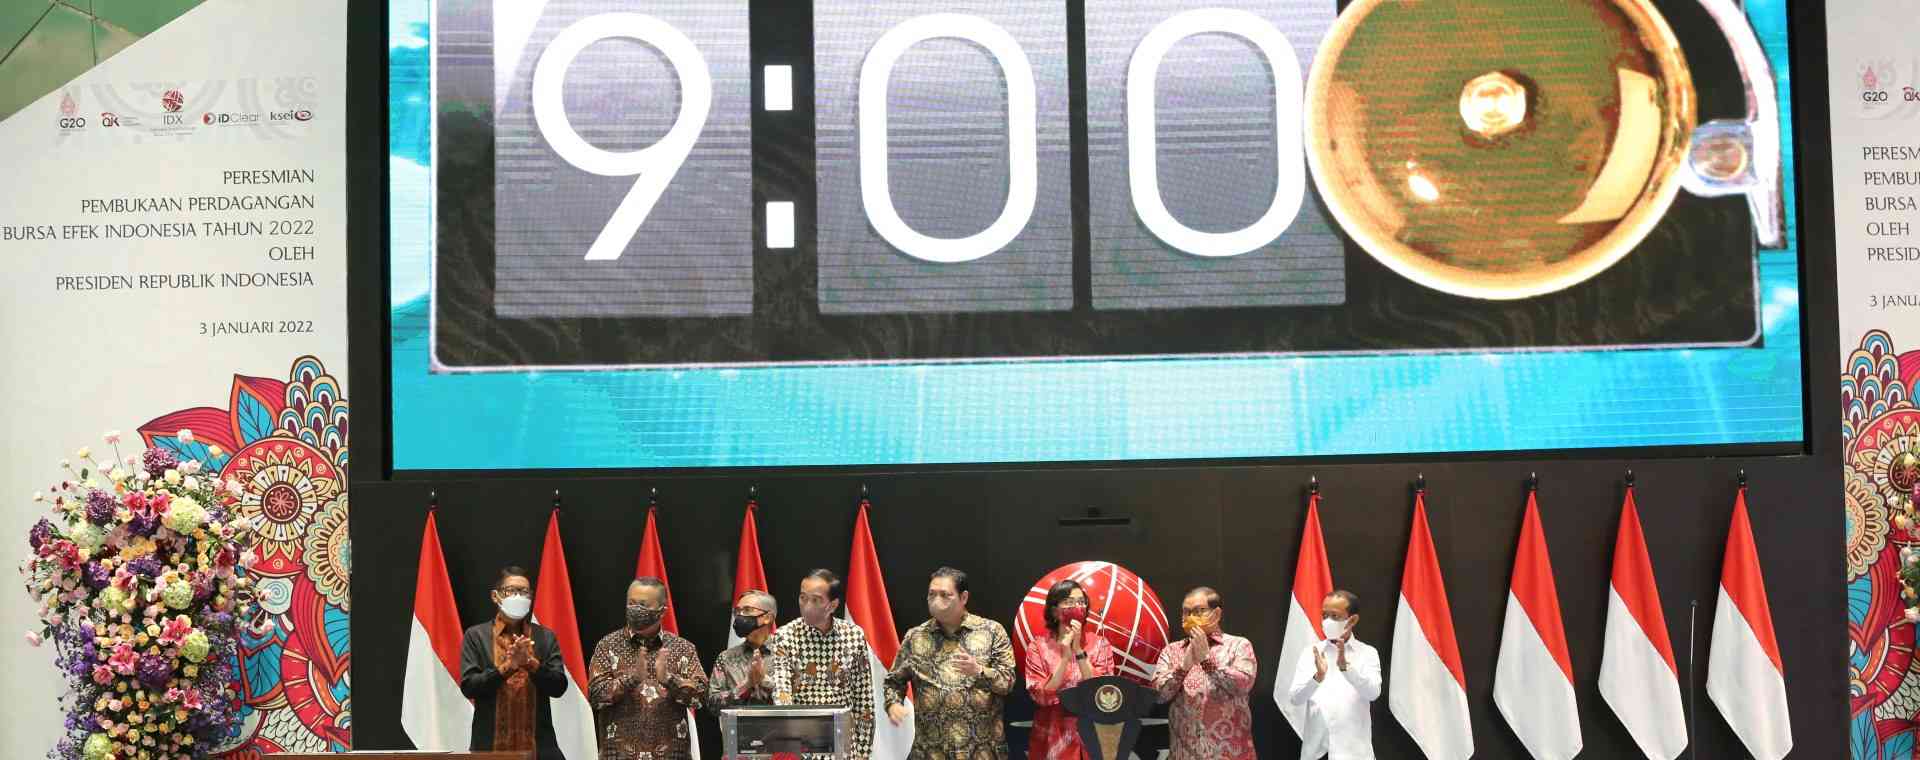 Presiden Joko Widodo (menekan tombol) didampingi oleh sejumlah menteri, Gubernur Bank Indonesia hingga Ketua Dewan Komisioner Otoritas Jasa Keuangan (OJK) membuka perdagangan saham perdana di 2022, pada hari ini, Senin (3/1/2022)./Istimewa. 